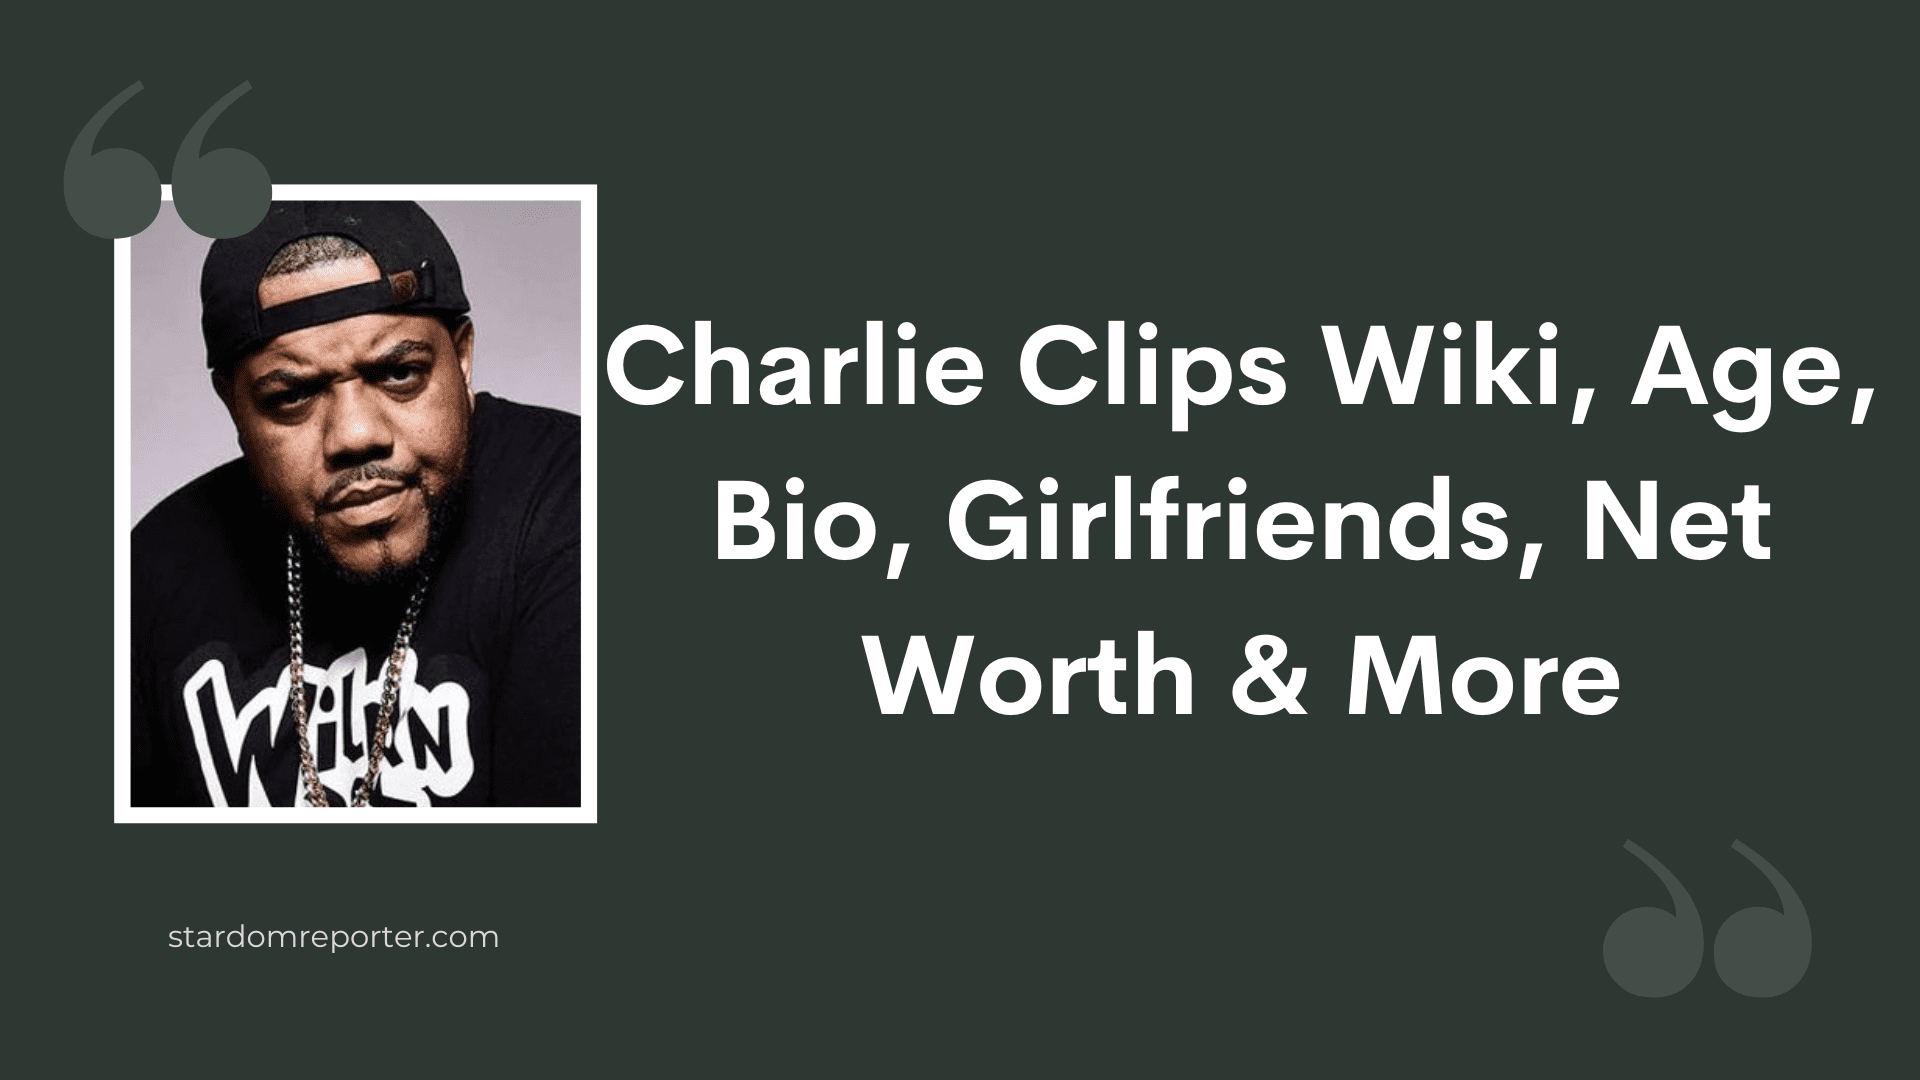 Charlie Clips Wiki, Age, Bio, Girlfriends, Net Worth & More - 25